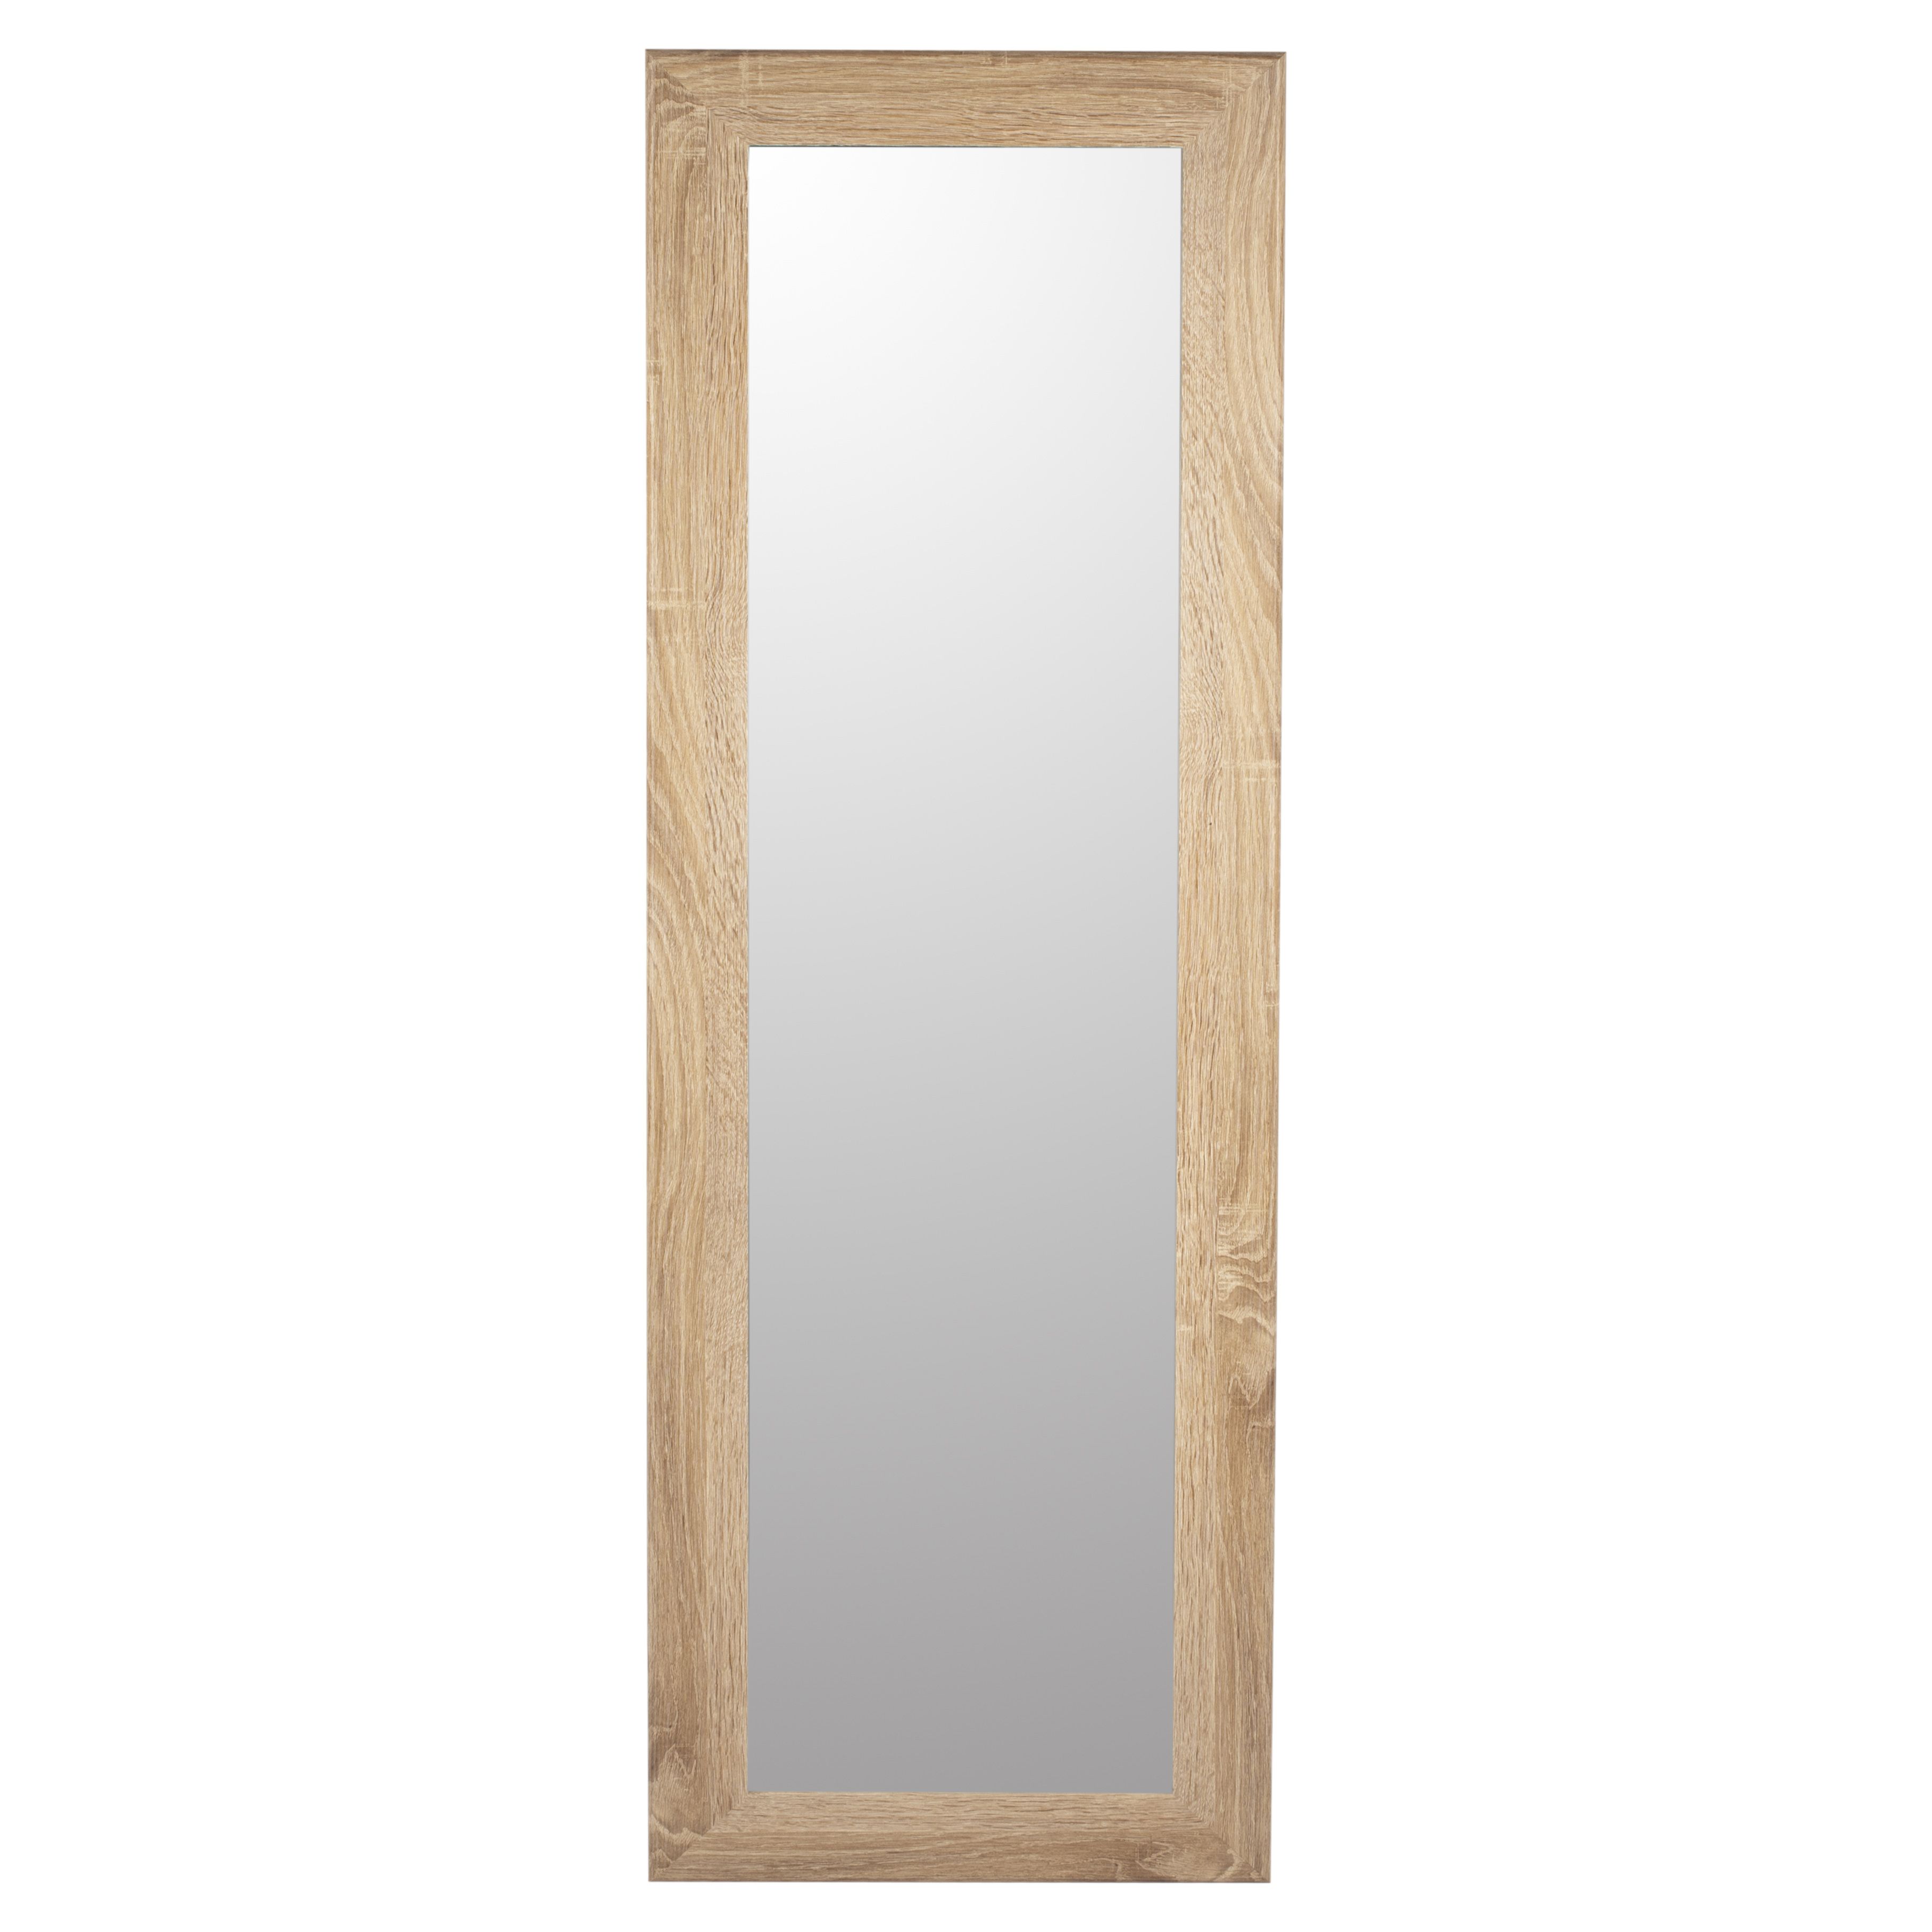 Andino Light oak effect Rectangular Wall-mounted Framed mirror, (H)133cm (W)43cm